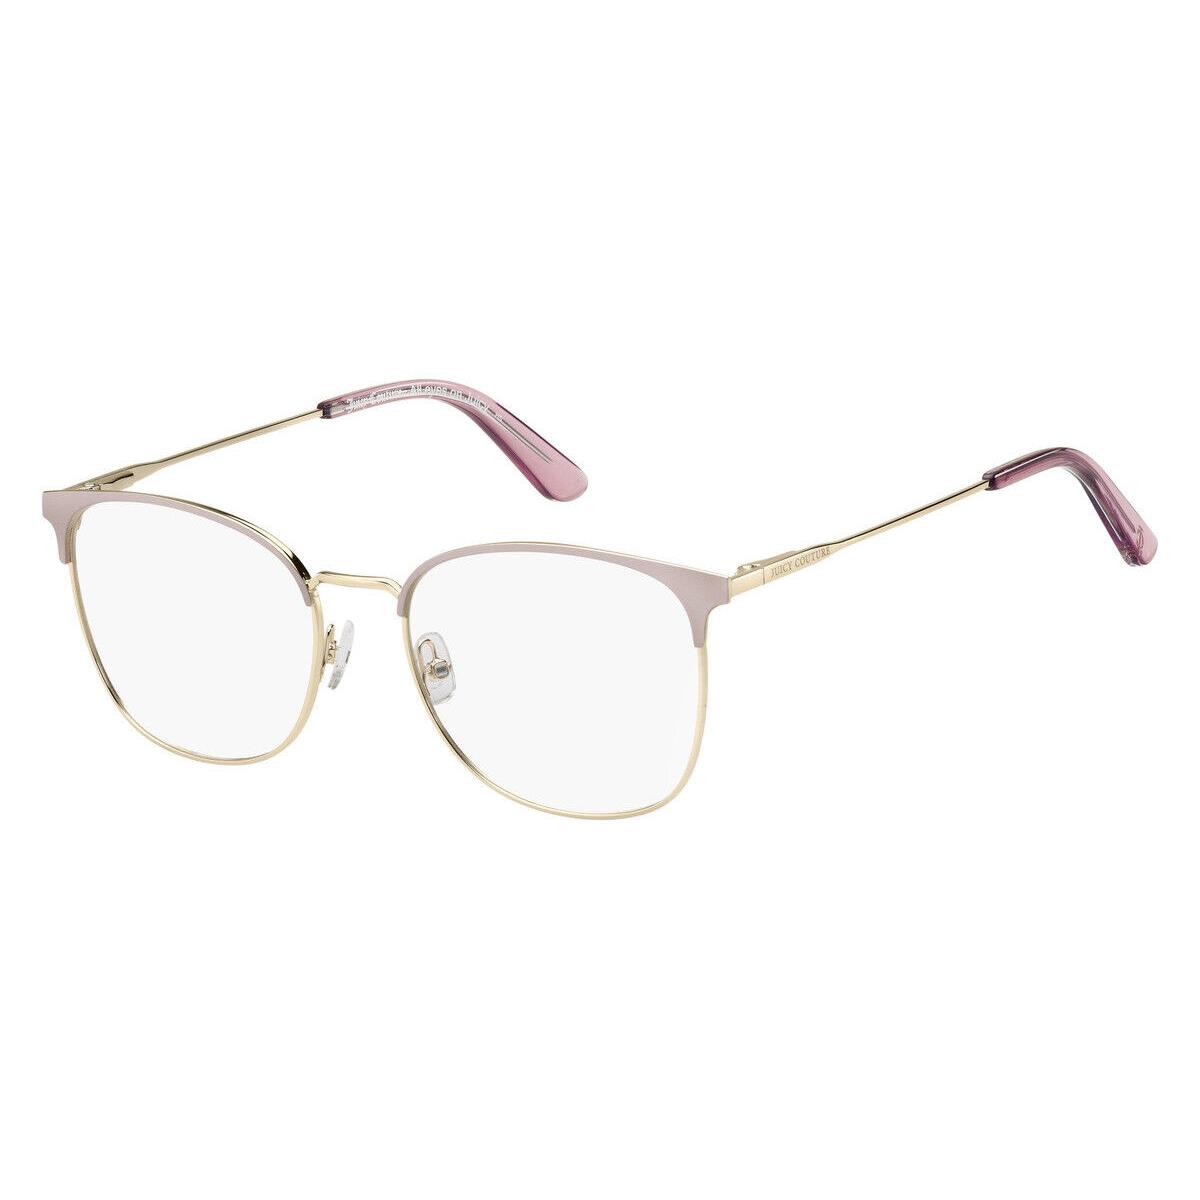 Juicy Couture 212 Eyeglasses Women 08KJ Matte Pink Oval 53mm